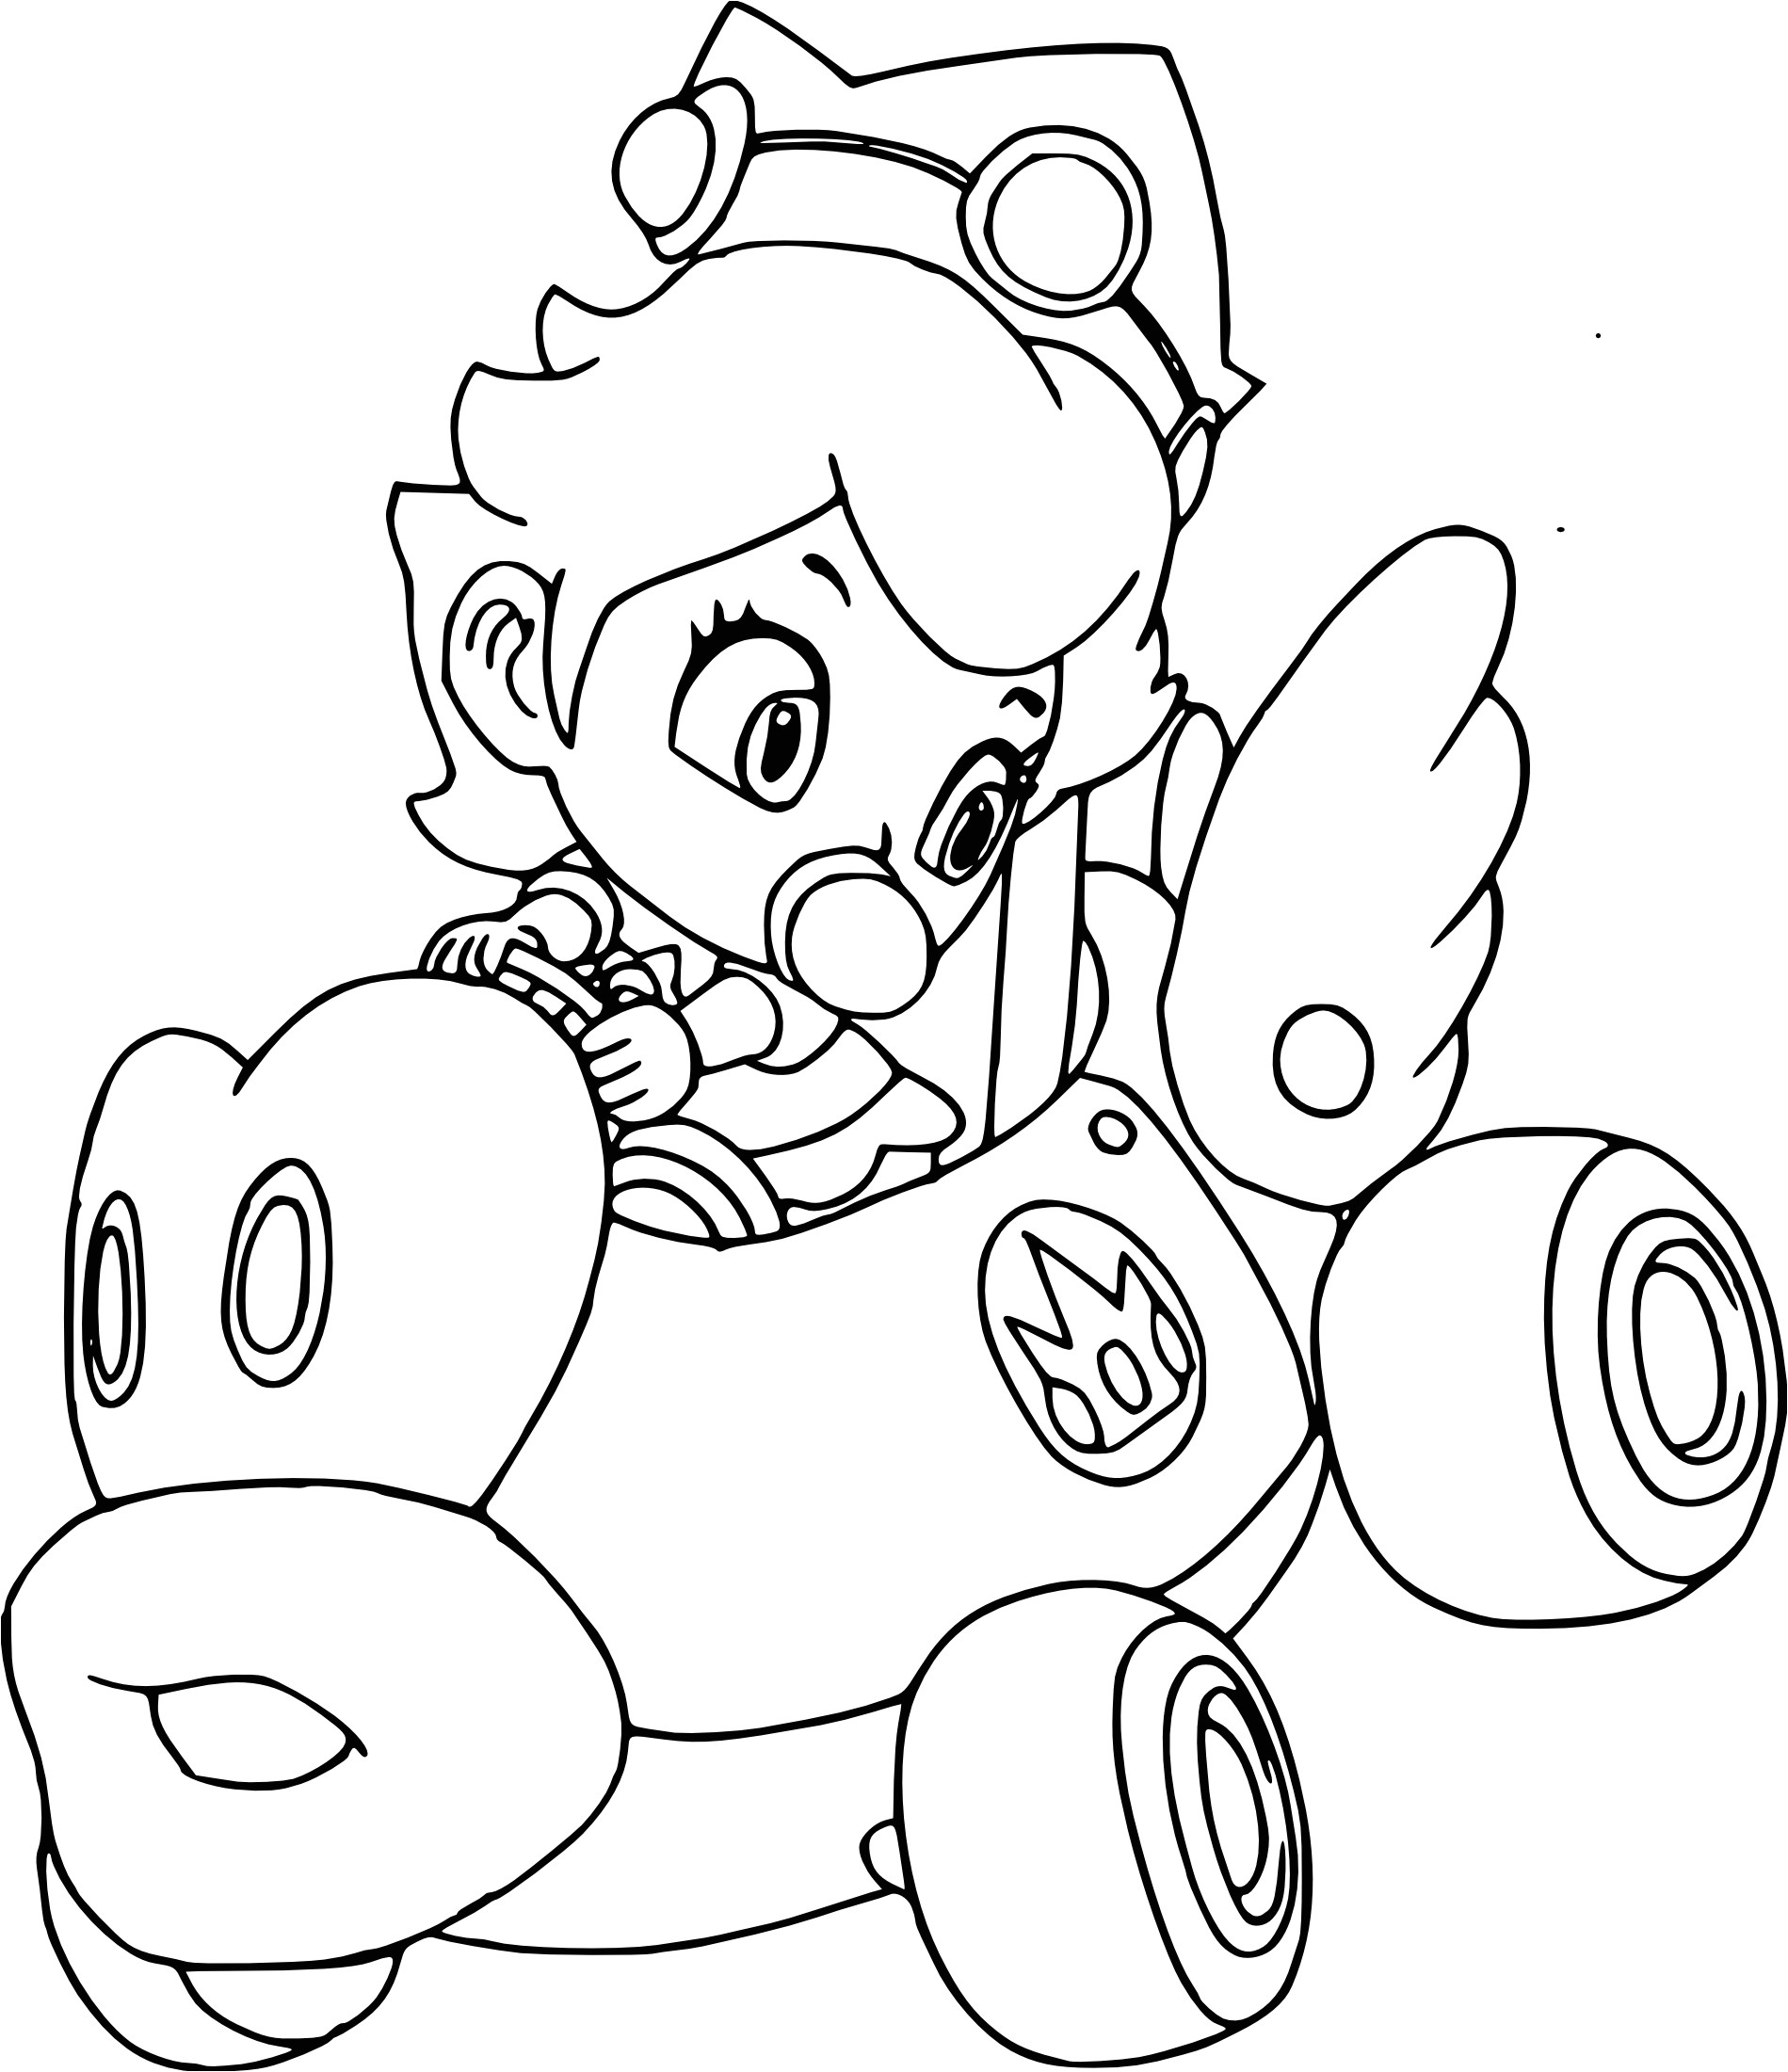 Coloriage Peach Mario Kart € Imprimer avec Coloriage Mario Kart